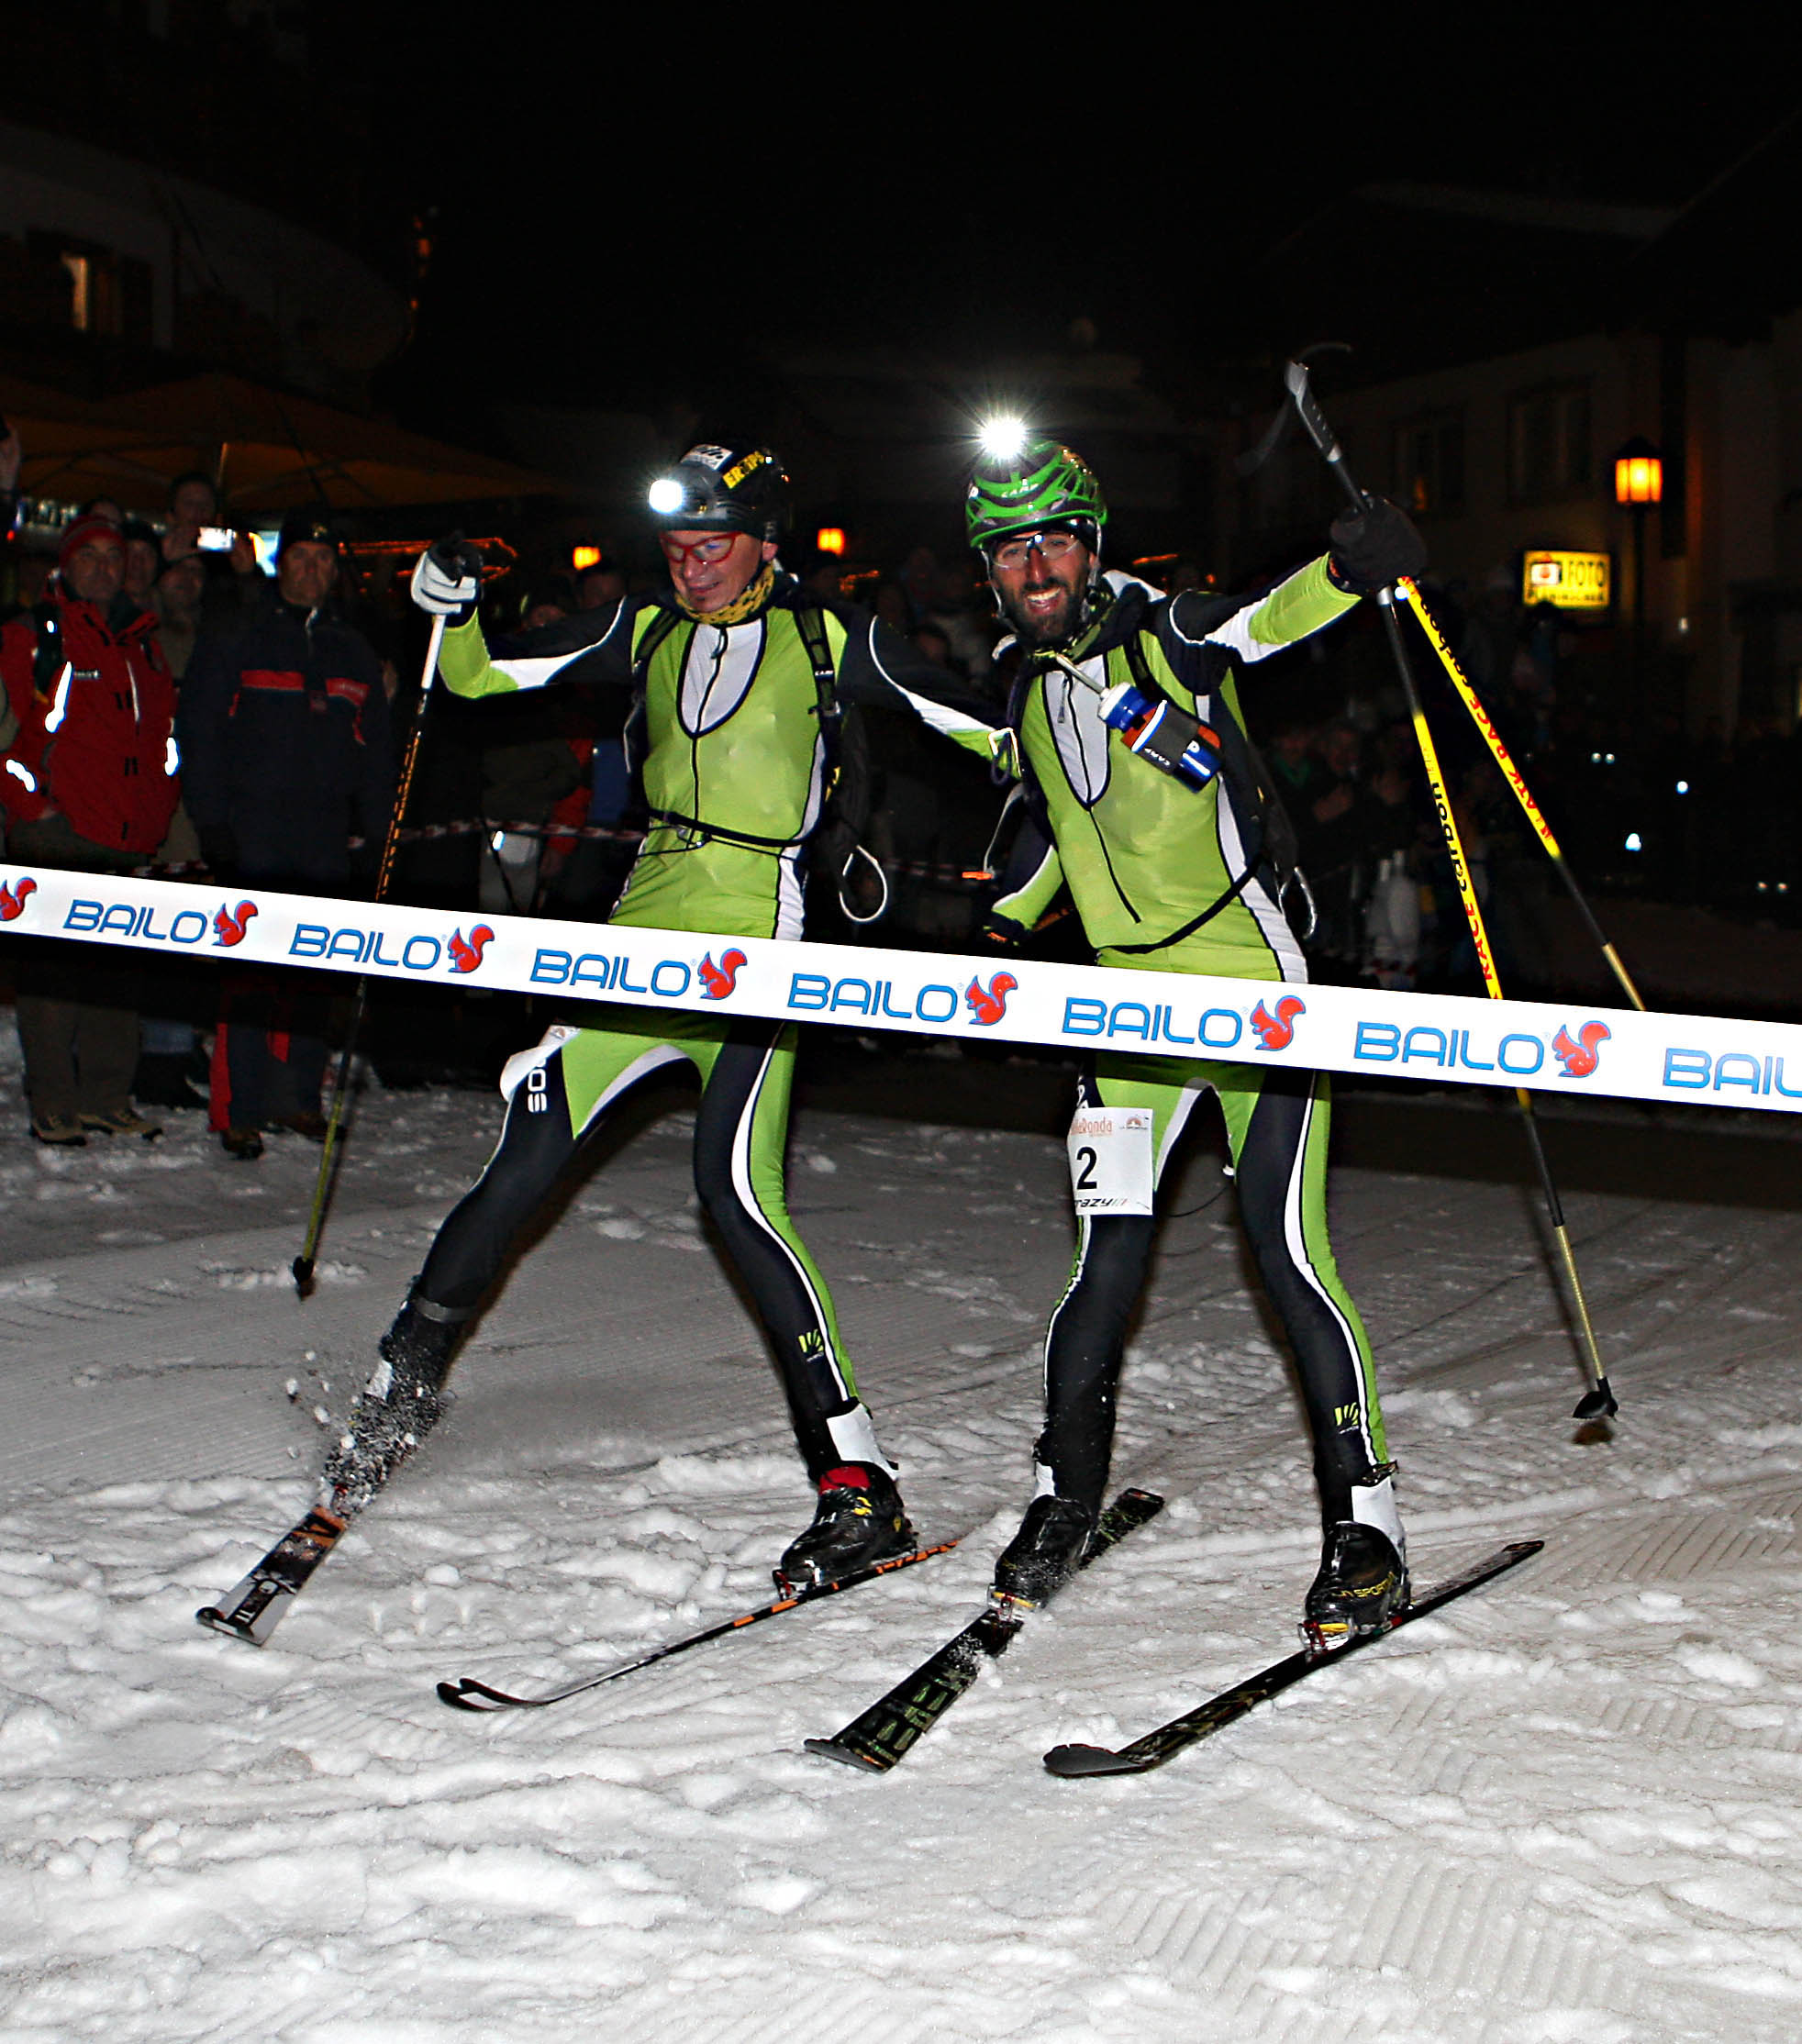 Sellaronda Skimarathon 2012, iscritti a quota 500